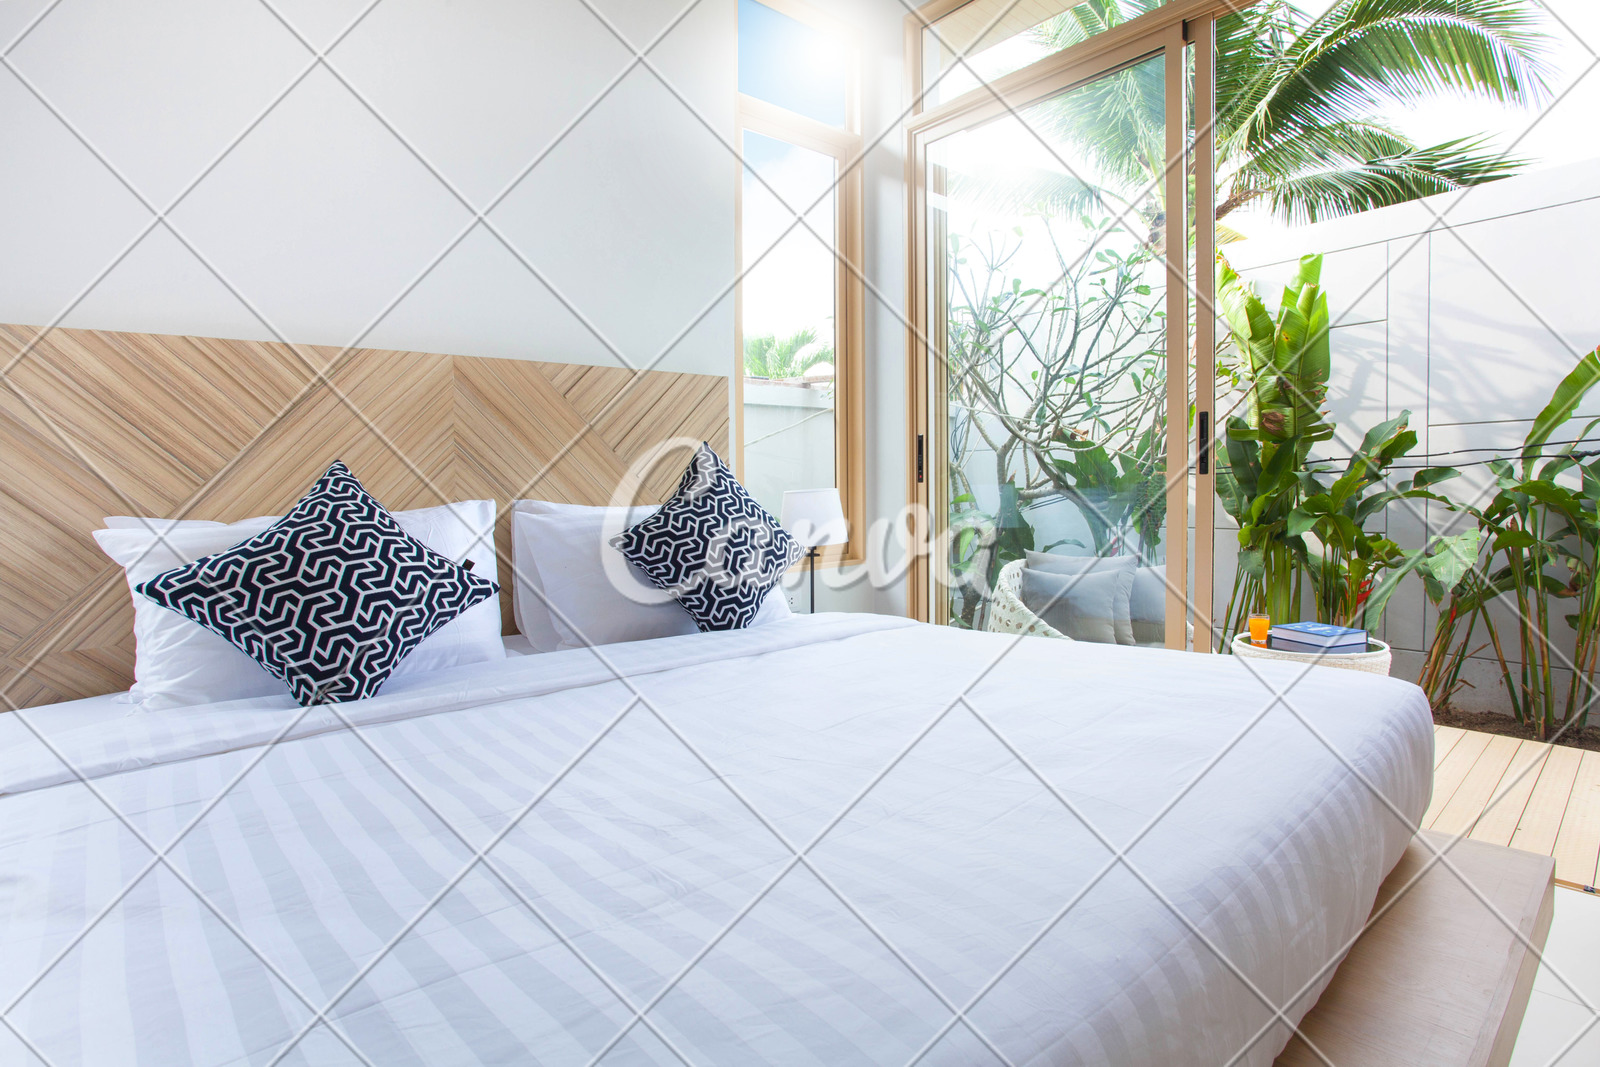 Luxury Interior Design In Bedroom Of Pool Villa With Cozy King Bed